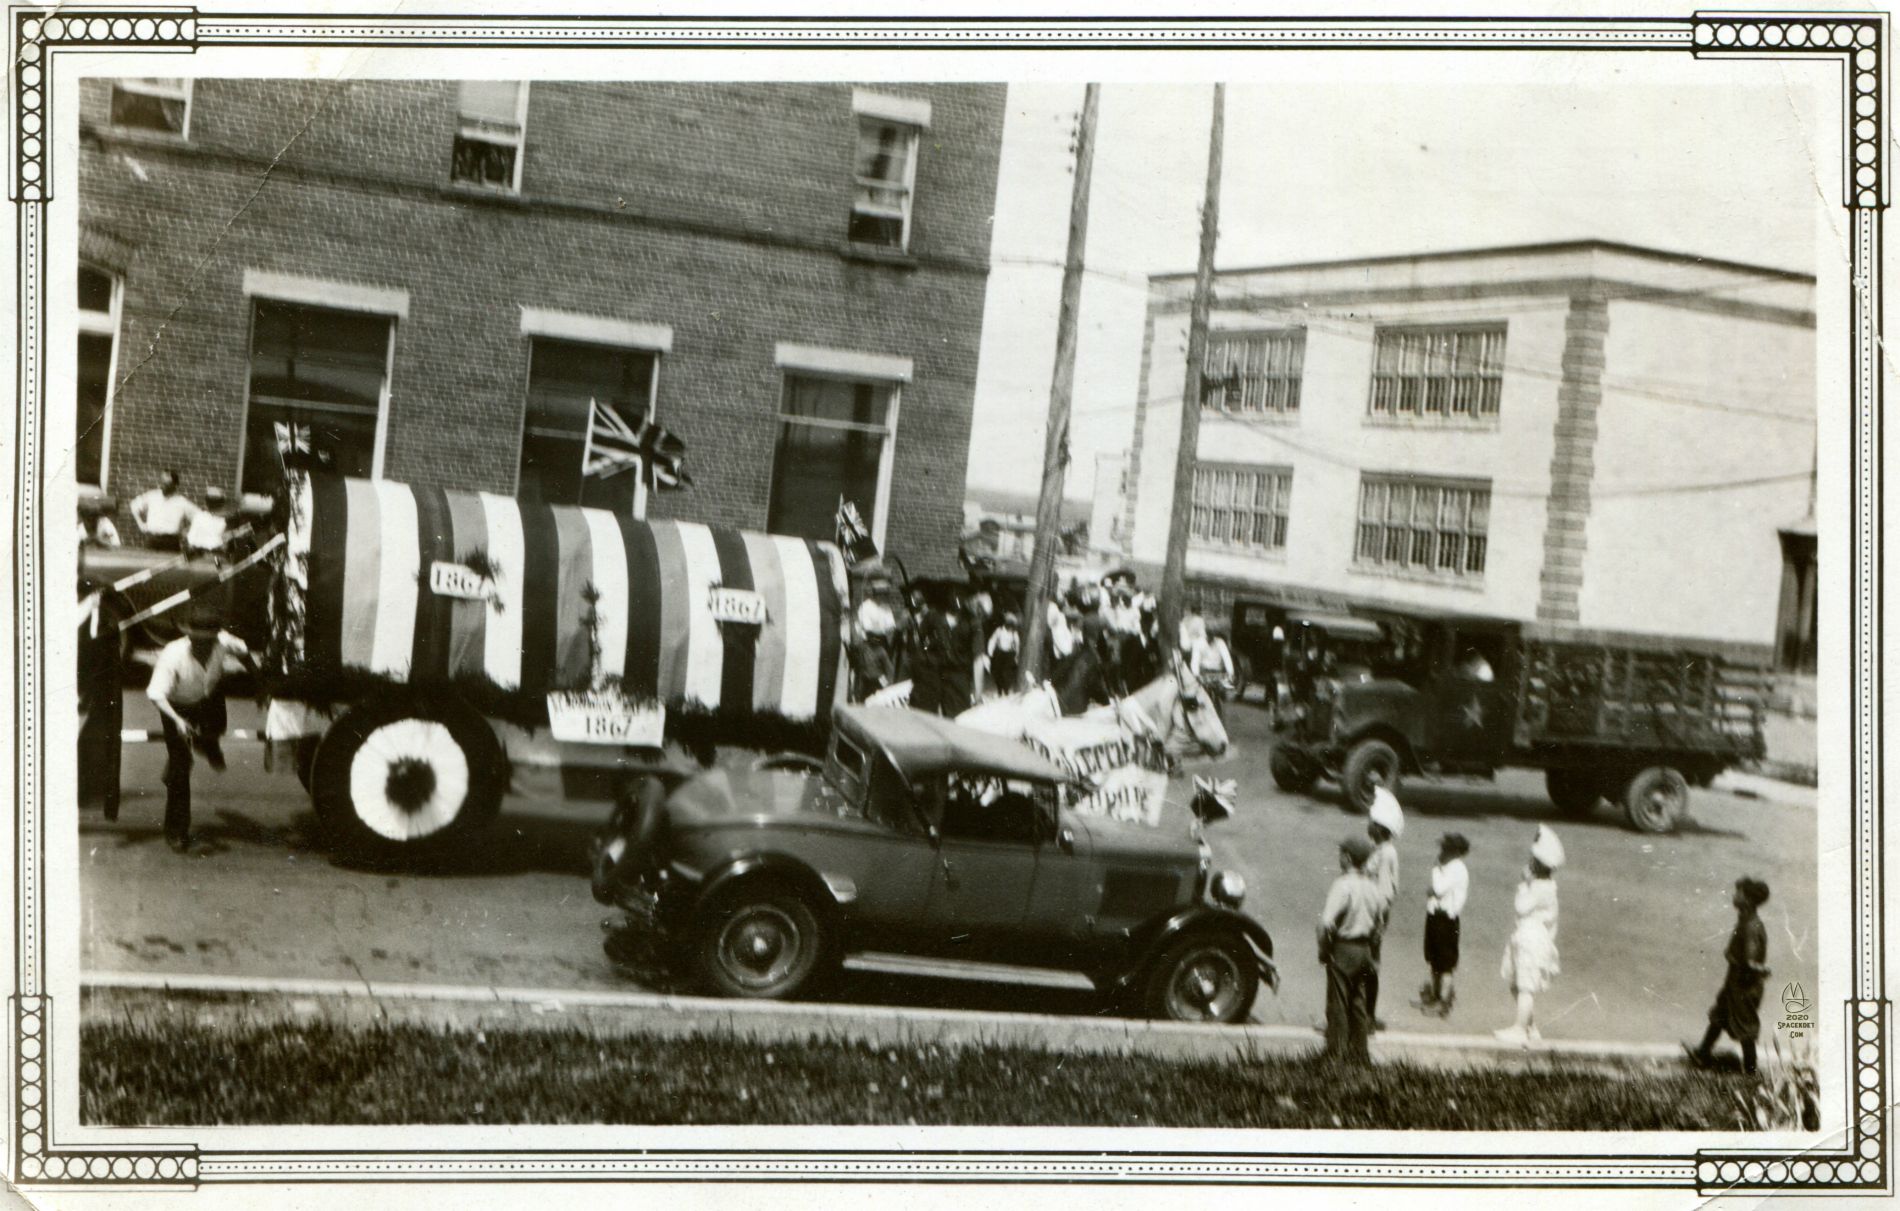 Parade in Timmins Ontario, 1927